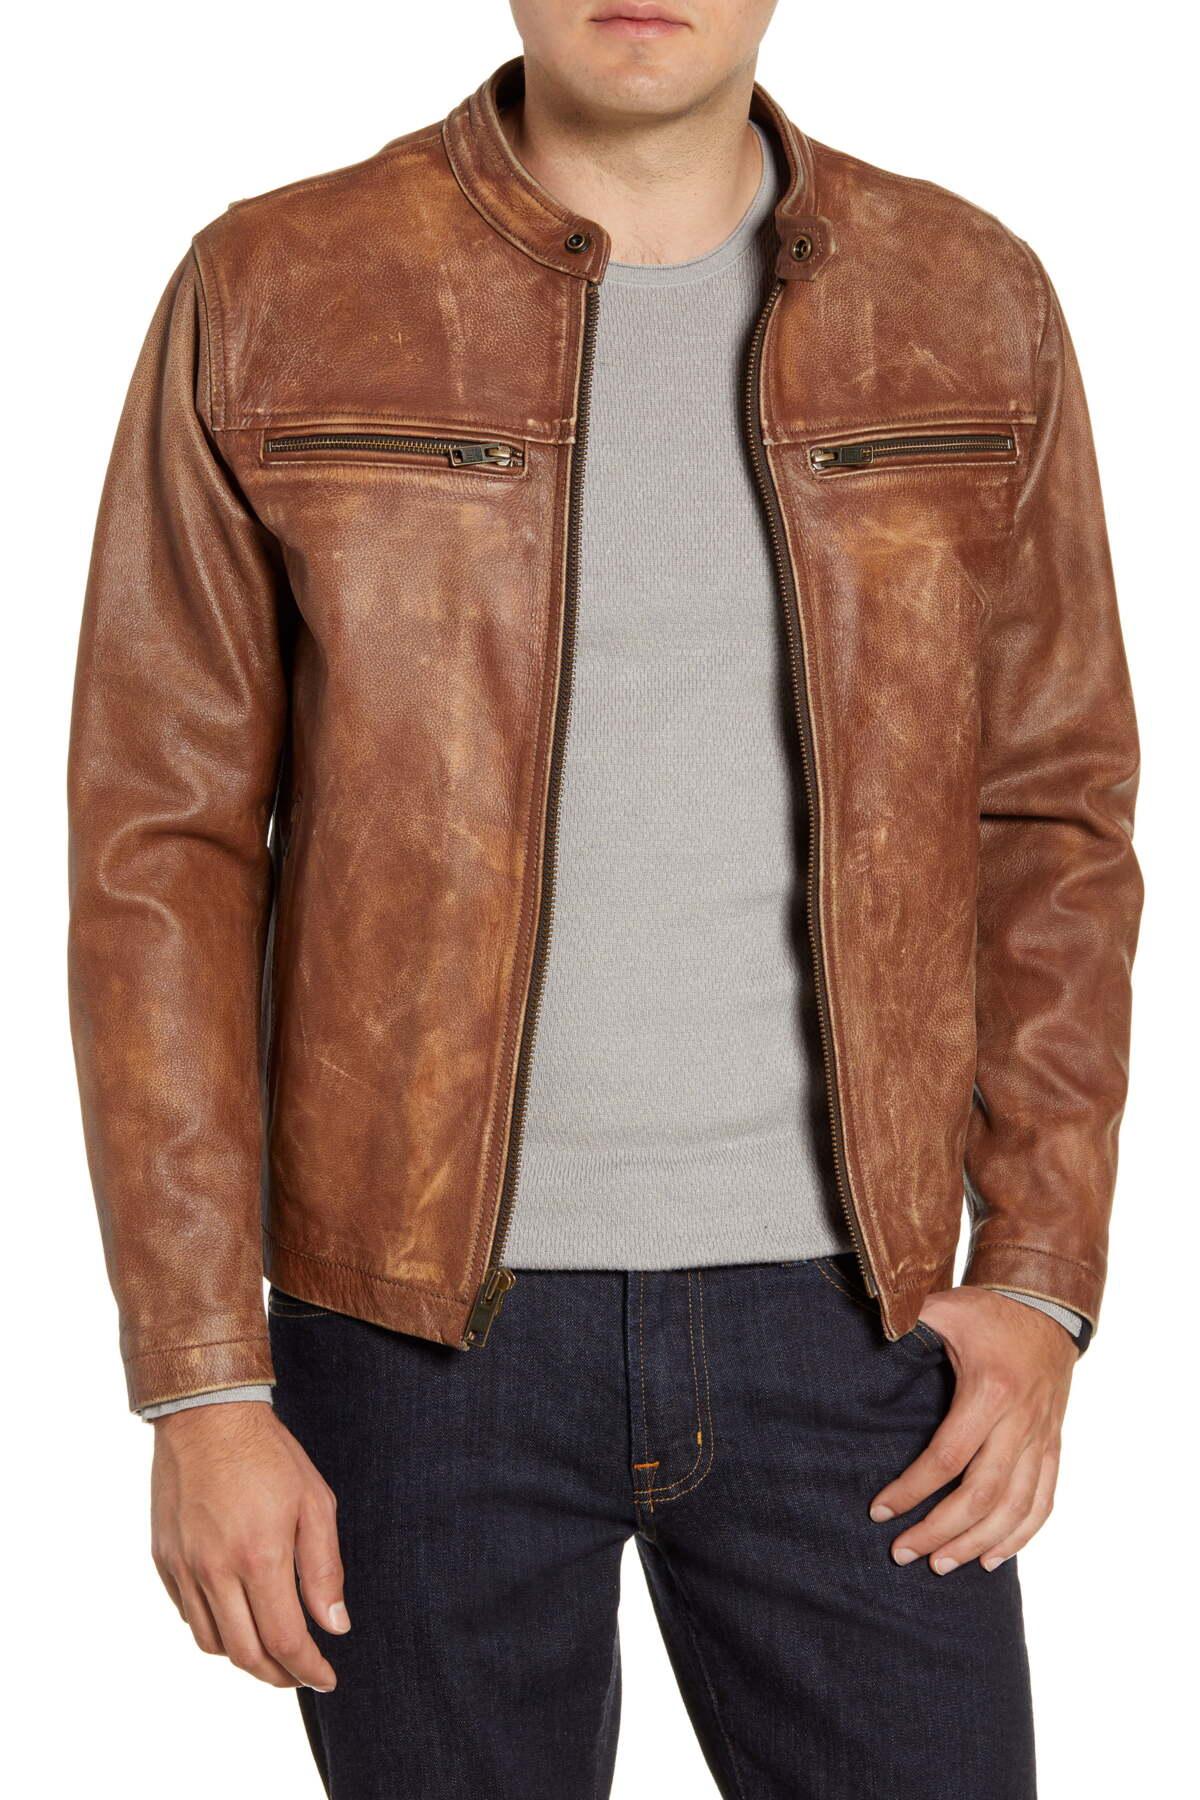 Frye Cafe Racer Leather Jacket in Brown for Men - Lyst